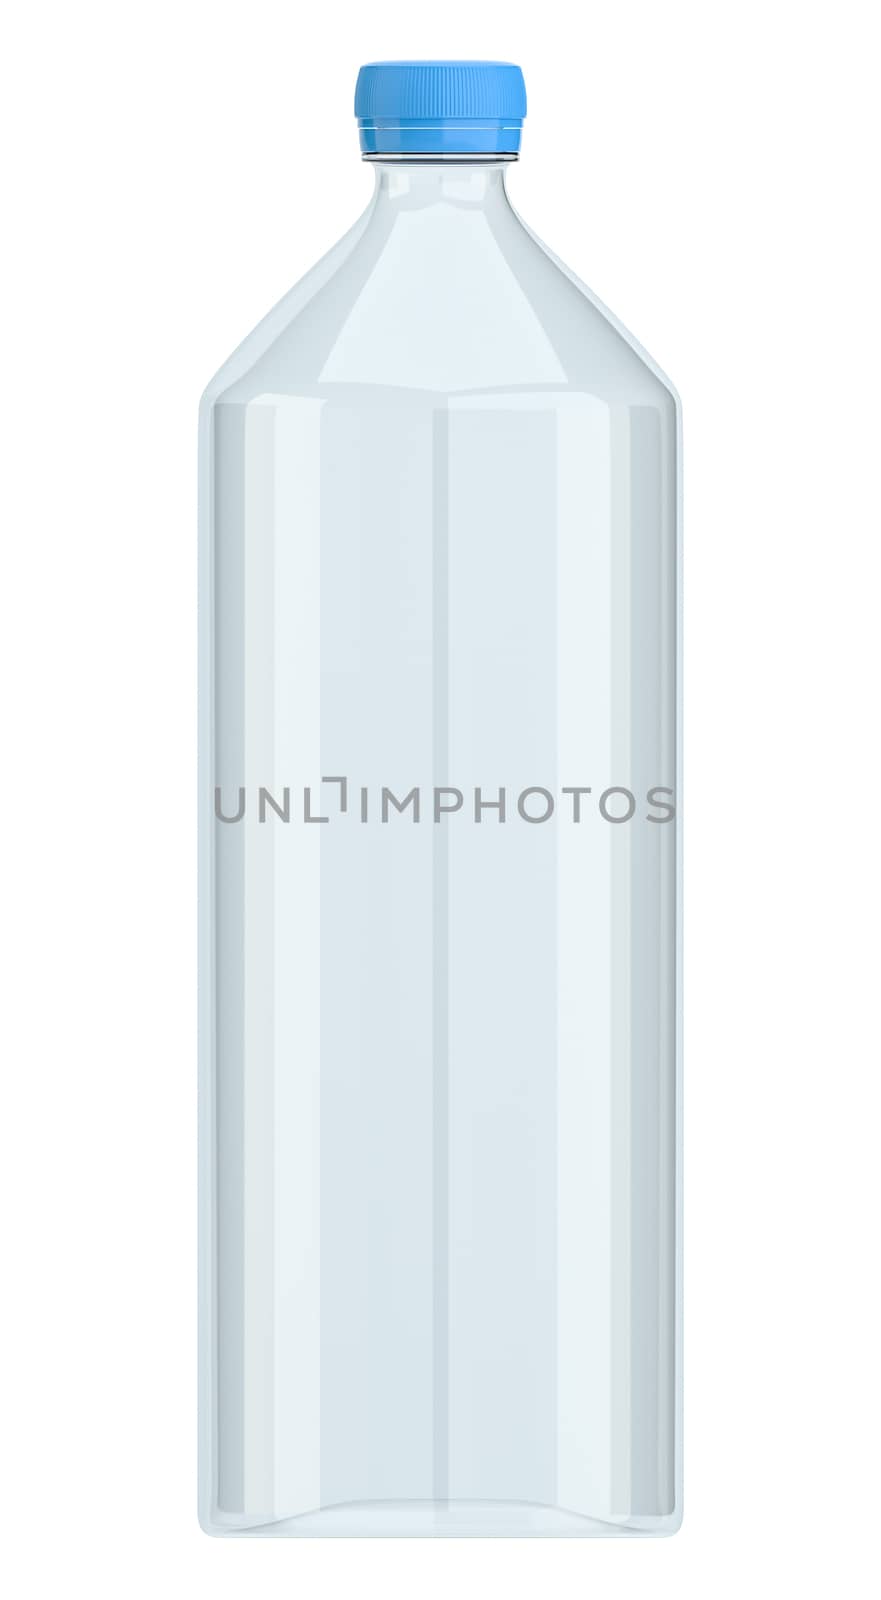 Small water bottle by cherezoff